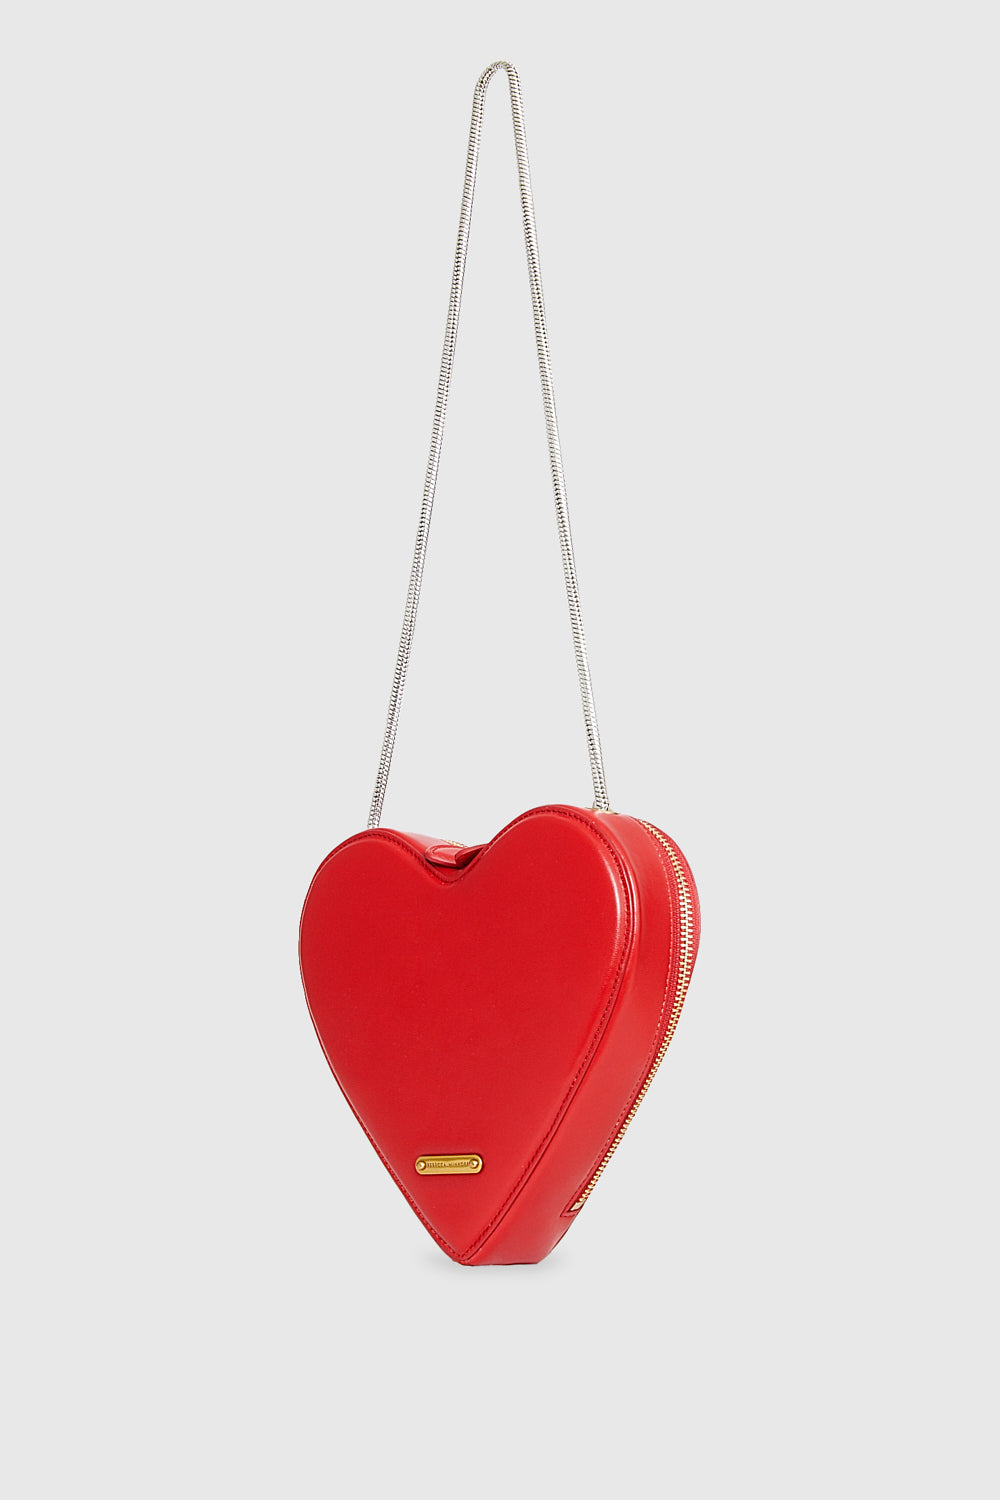 Heart Bag in Red - Rebecca Minkoff